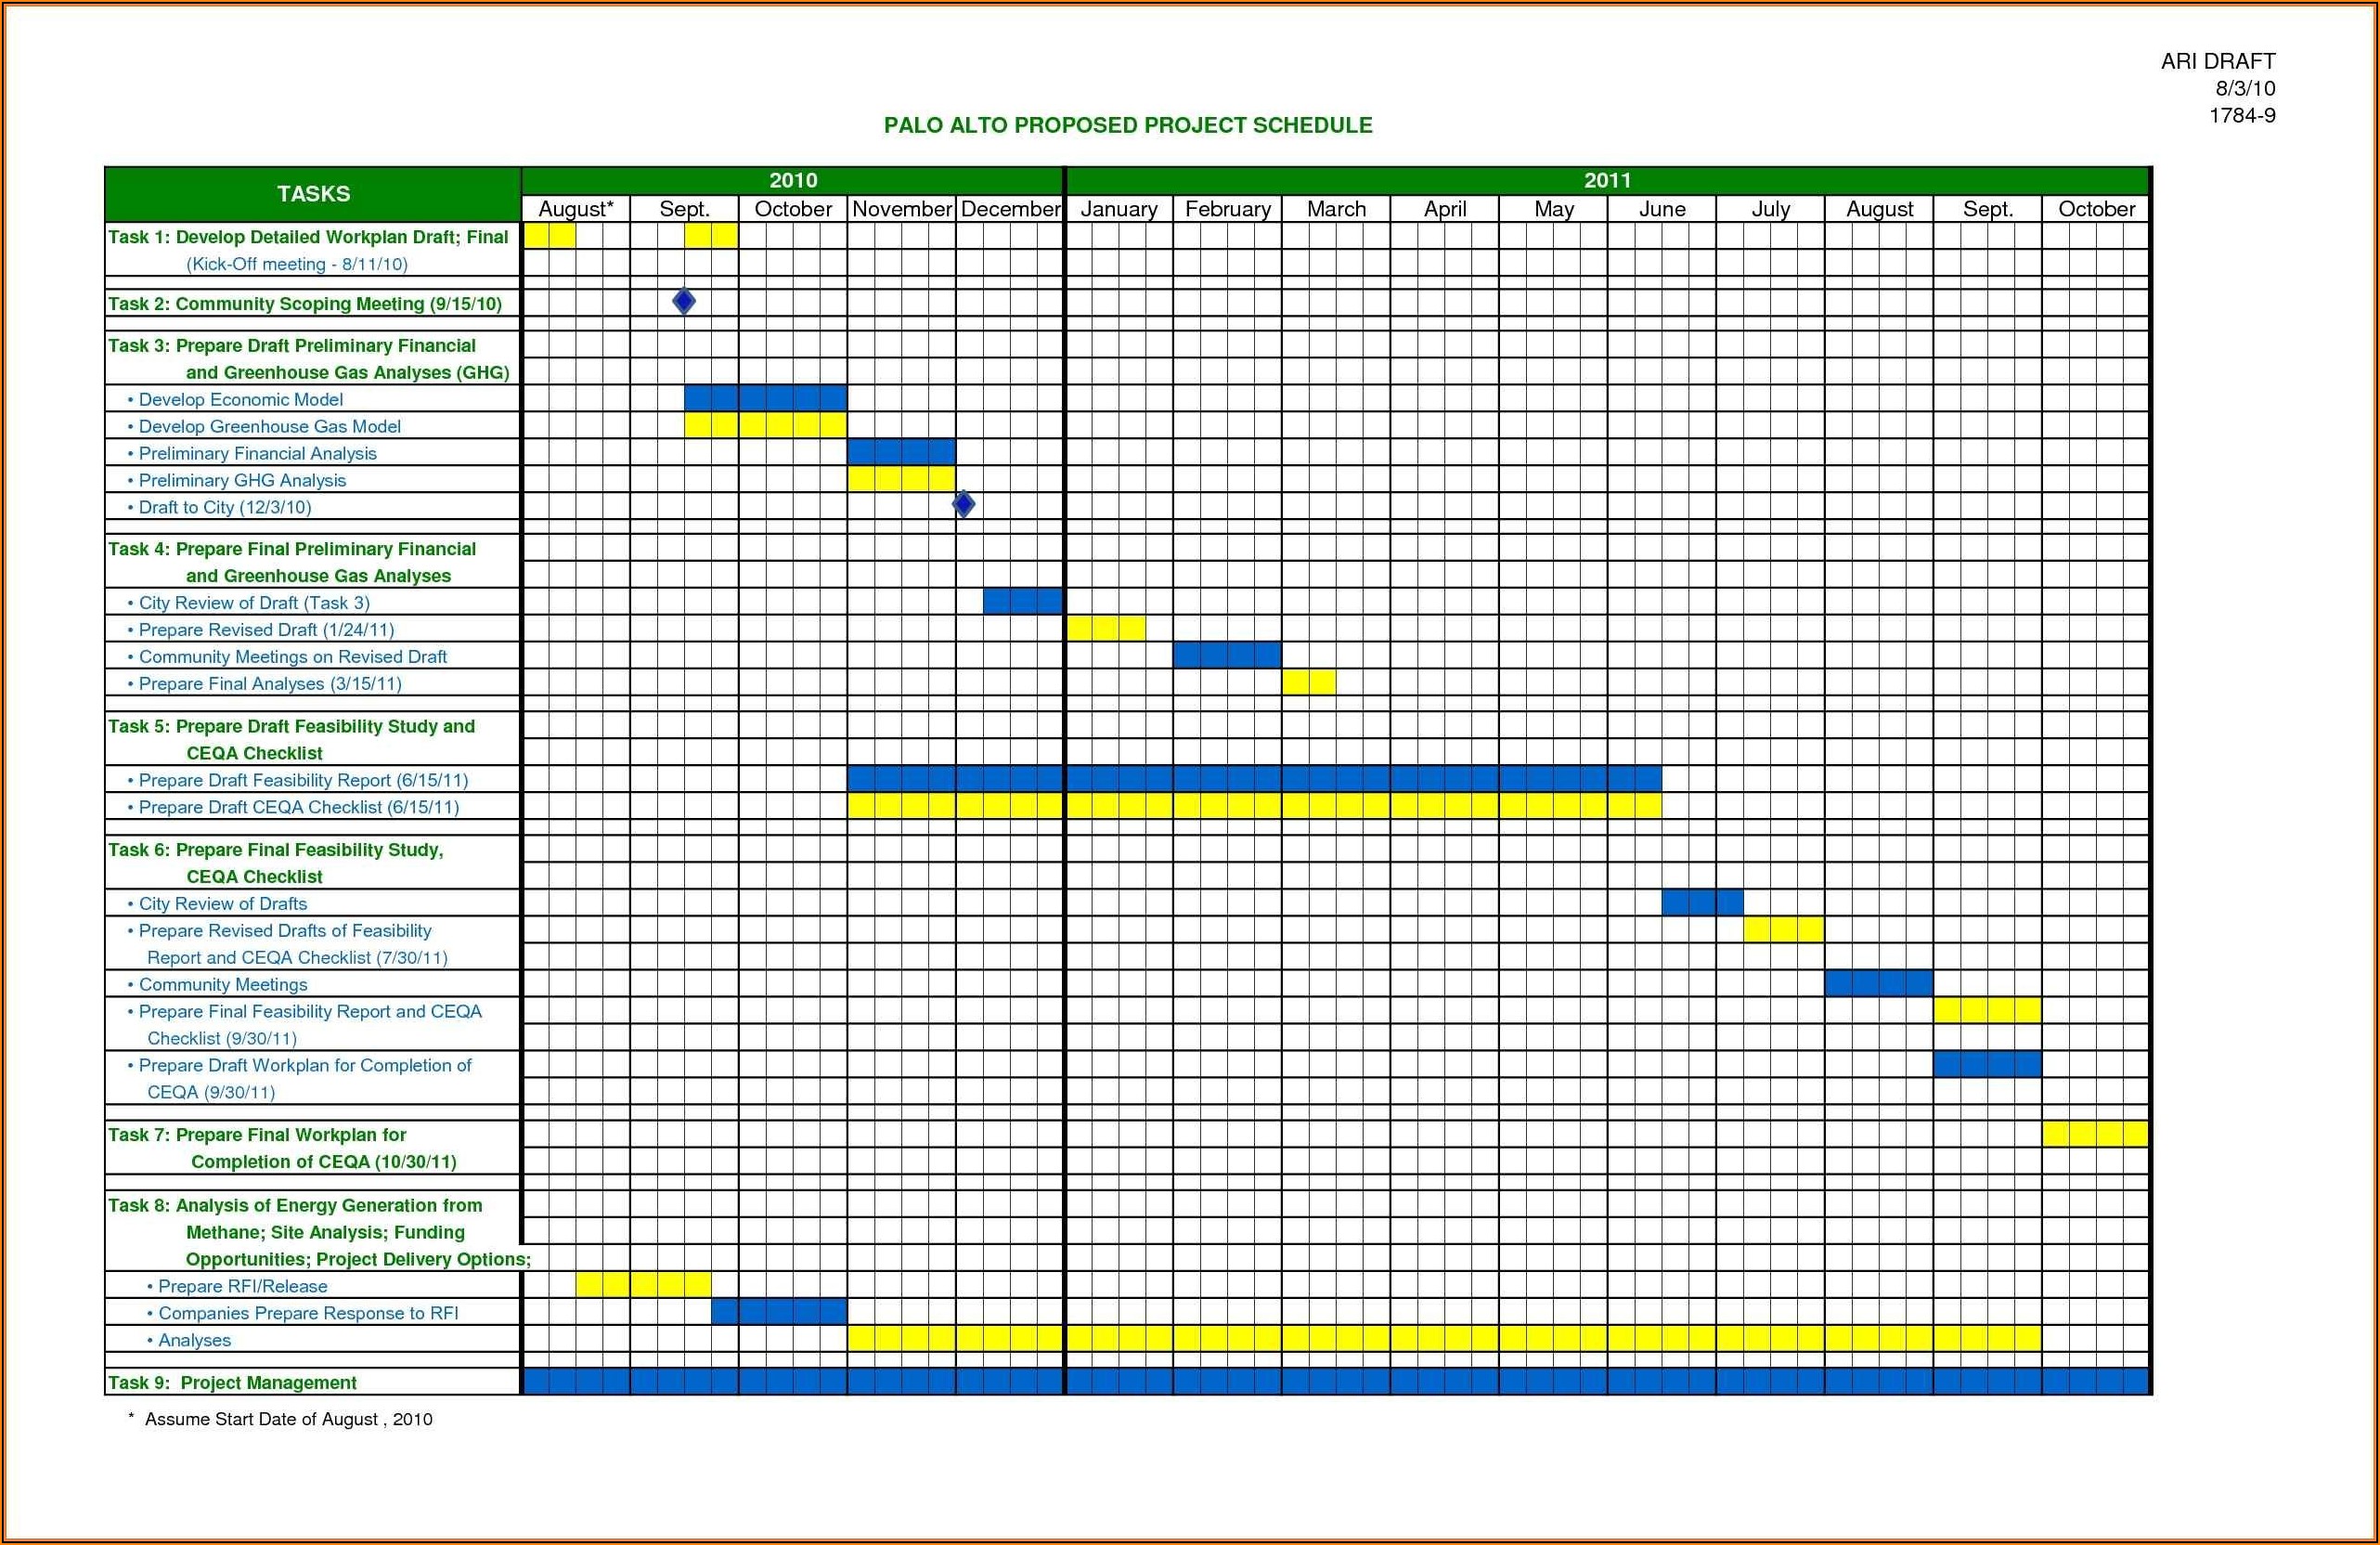 Excel Employee Schedule Template Free Download